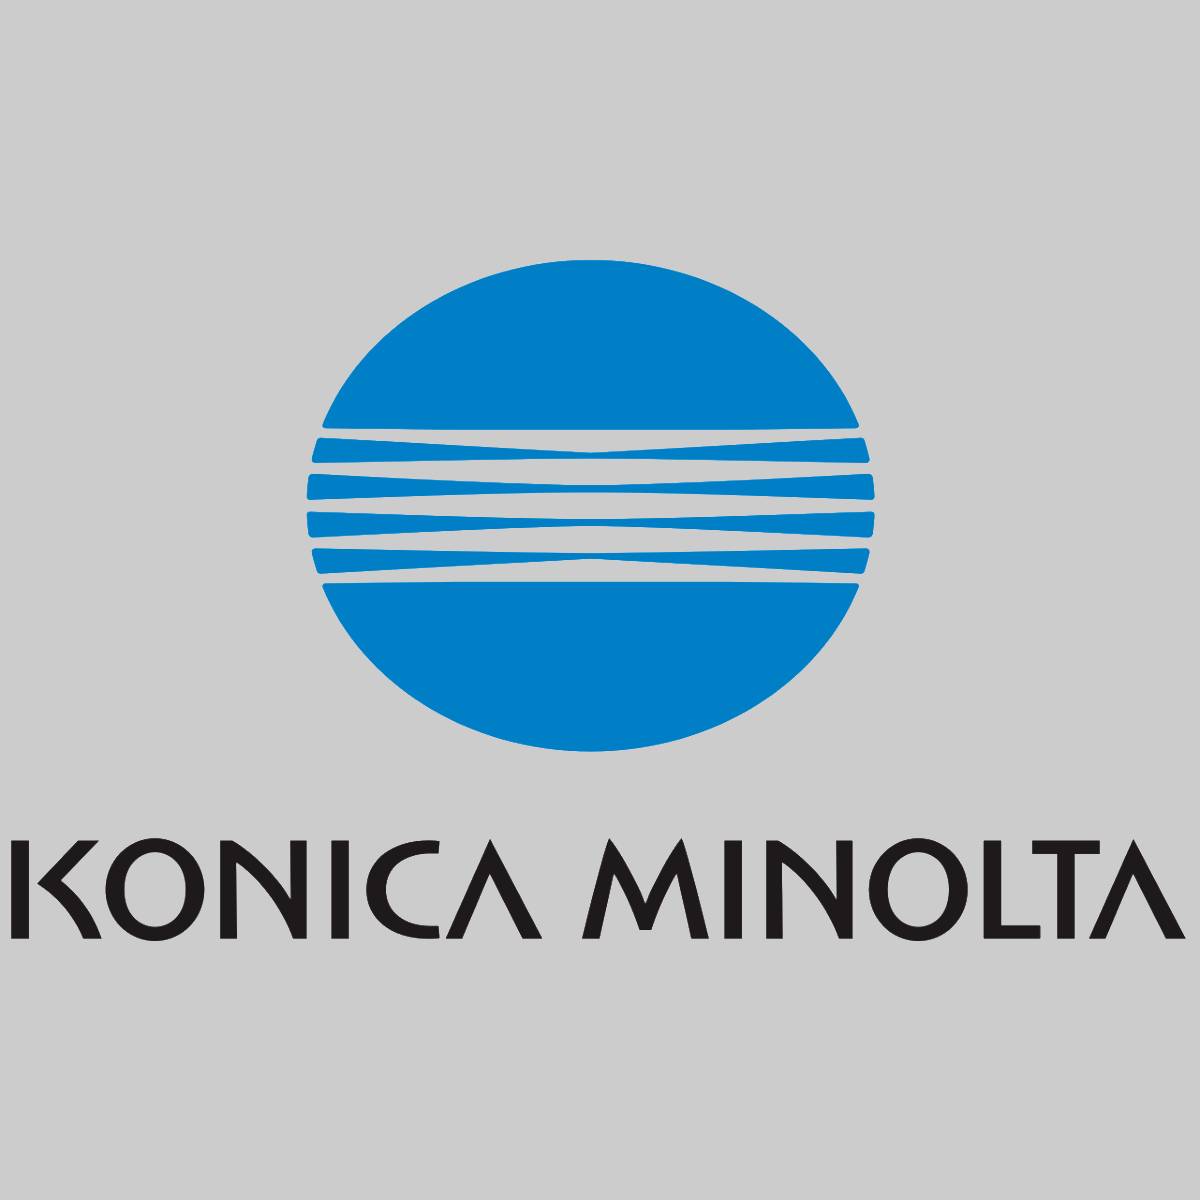 "Original Konica Minolta WX-101 Toner Waste Box A162WY2 für Bizhub C220 C280 C36